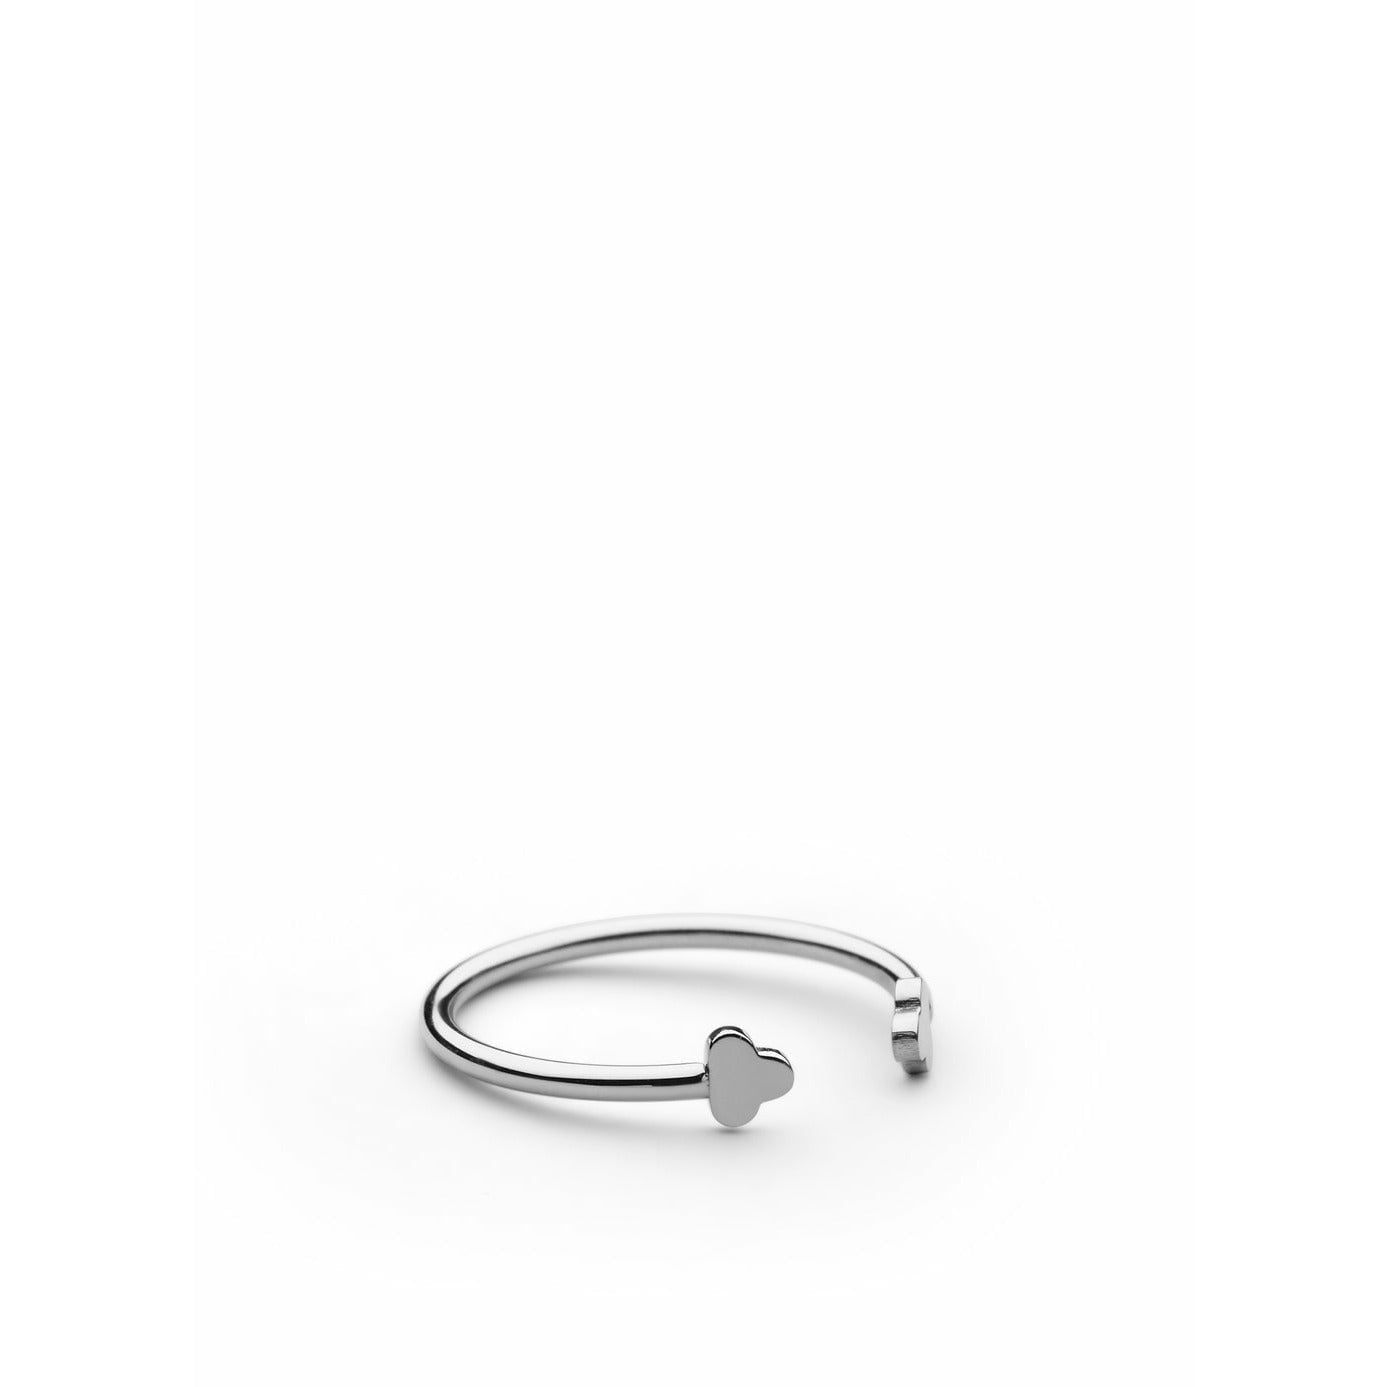 Skultuna Open Key Ring Medium Polished Steel, ø1,73 Cm